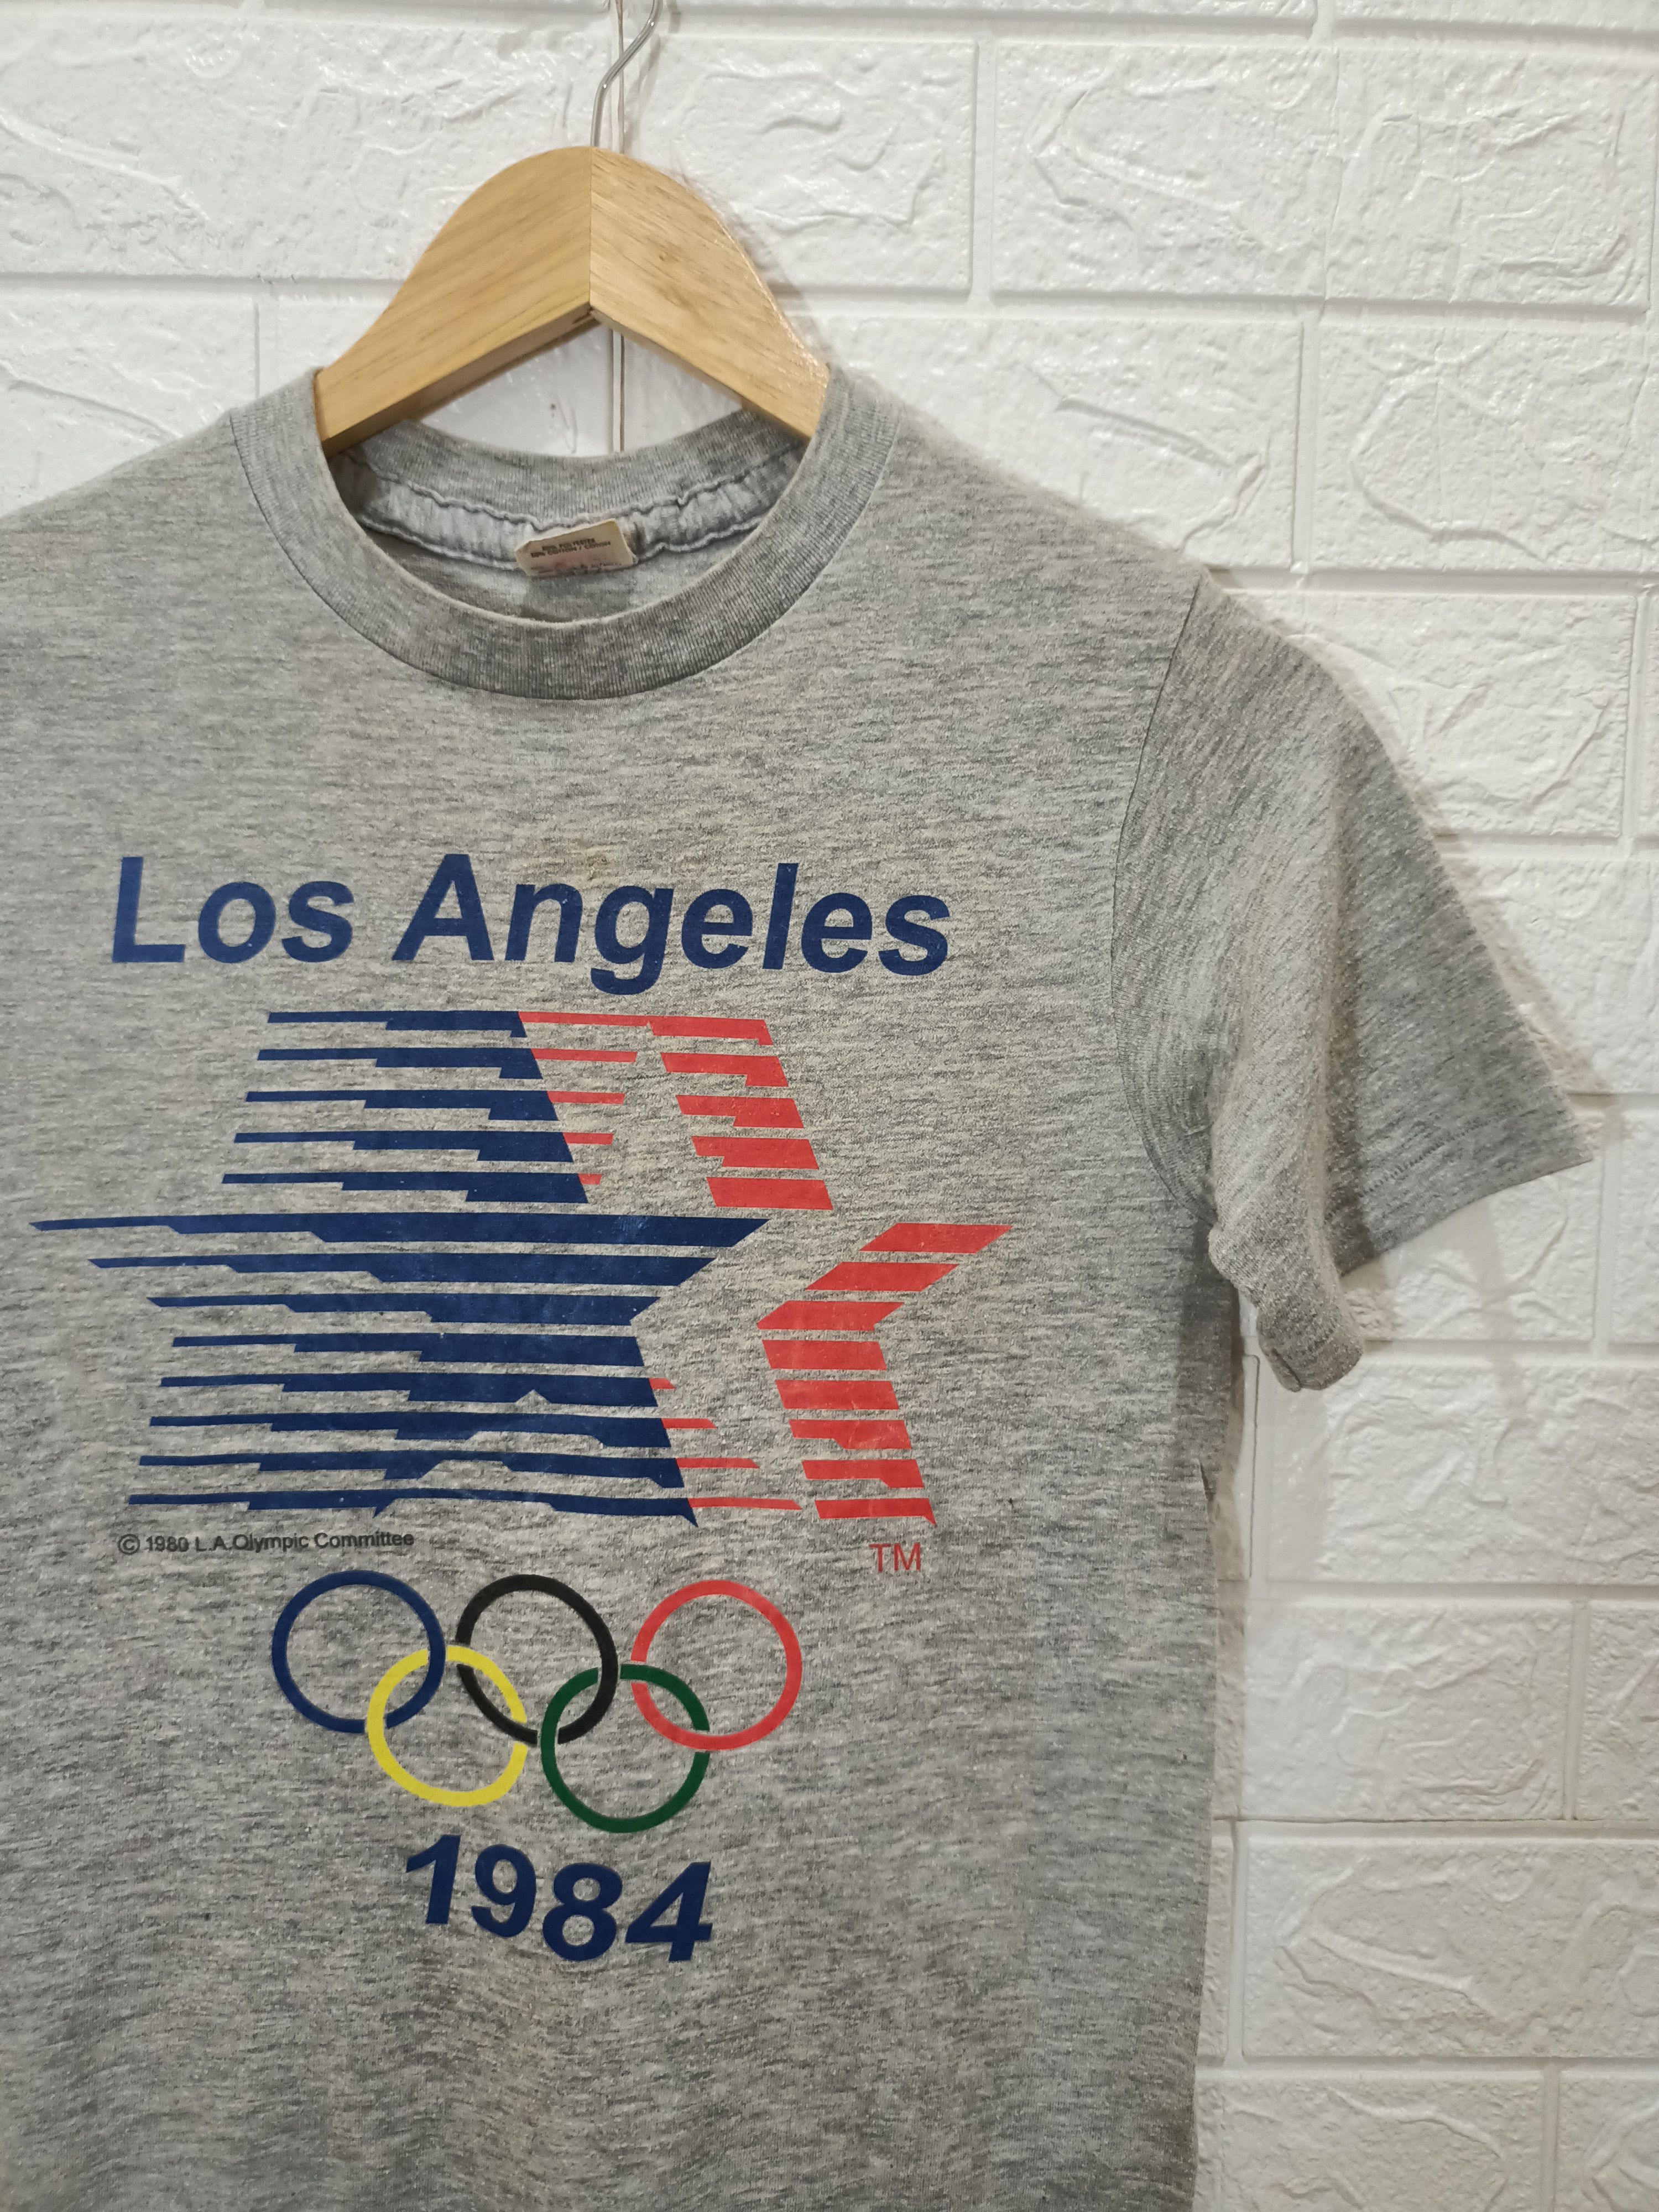 Rare Vintage 1984 Olympics Los Angeles Graphic Tee - 5